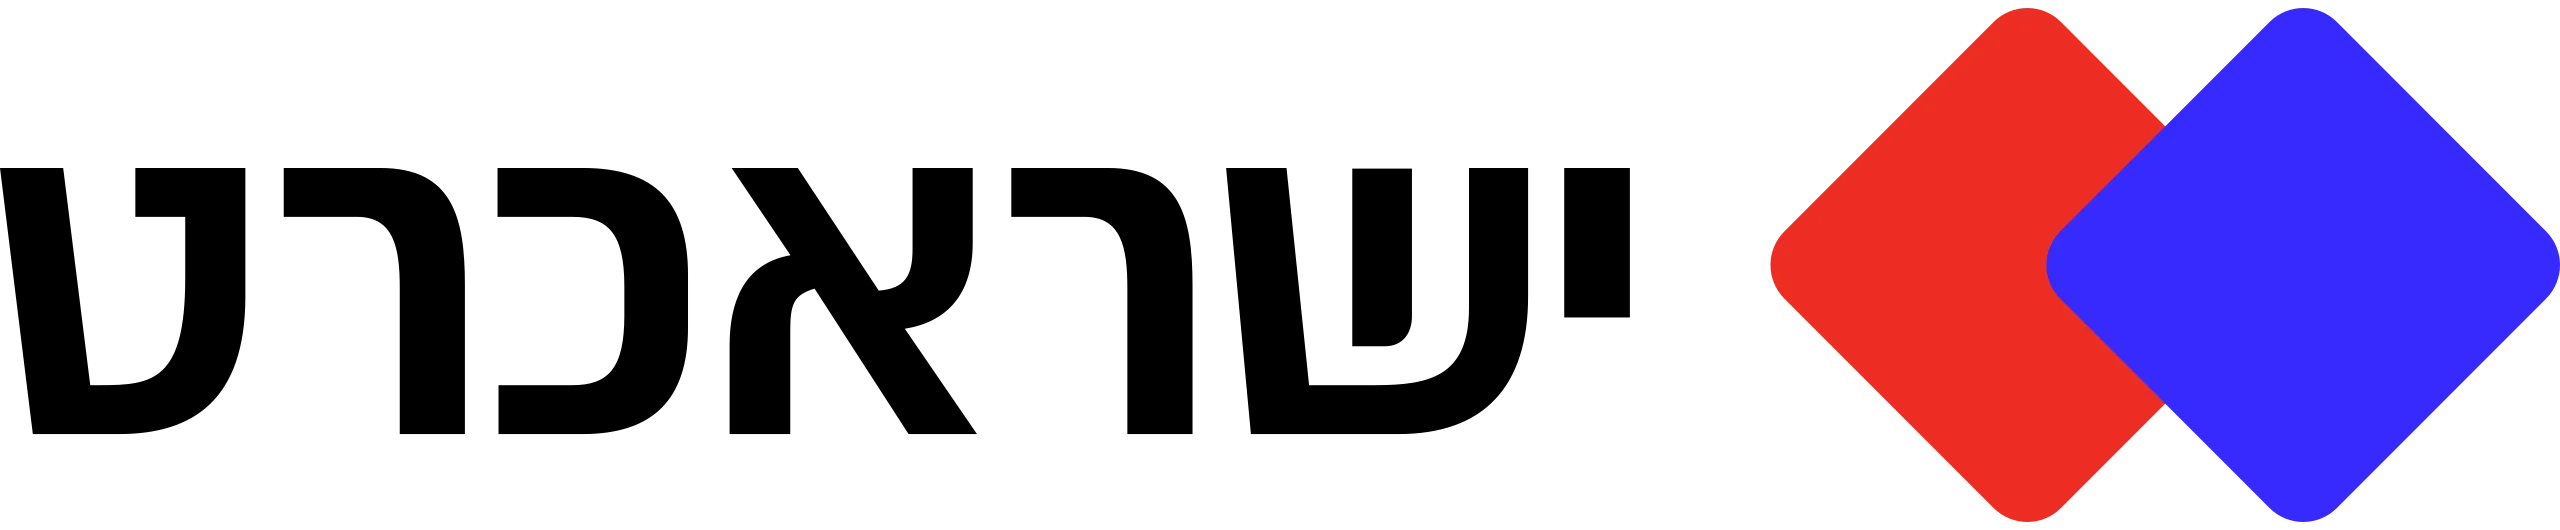 2560px-Isracard_2020_Logo.svg_.webp